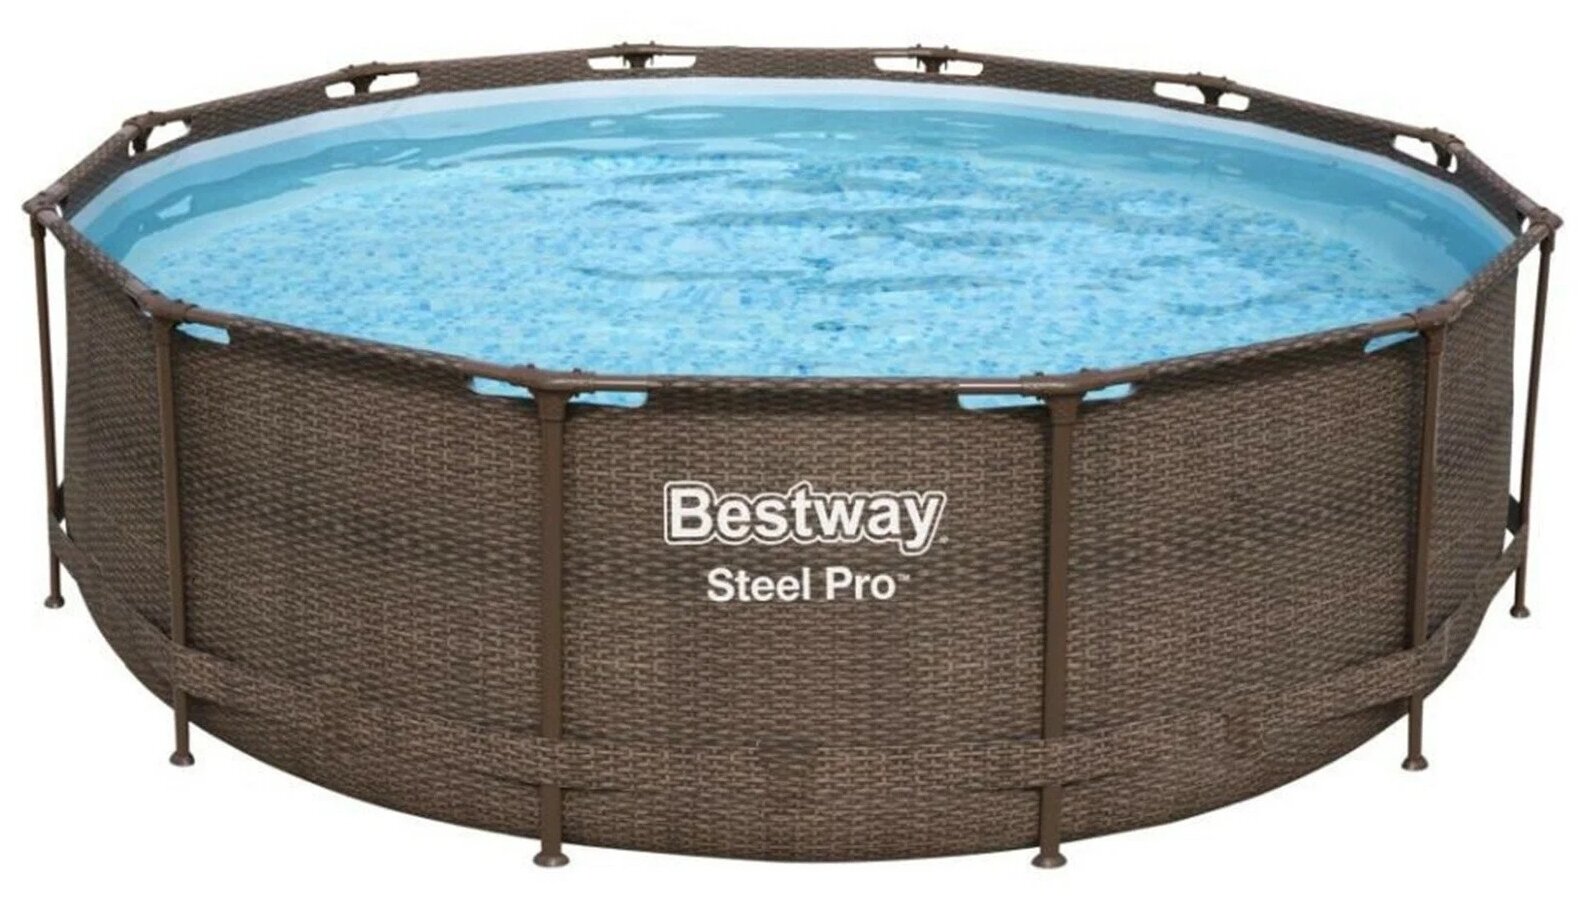 Бассейн каркасный Bestway Steel Pro 305 x 100 см, ротанг, круглый